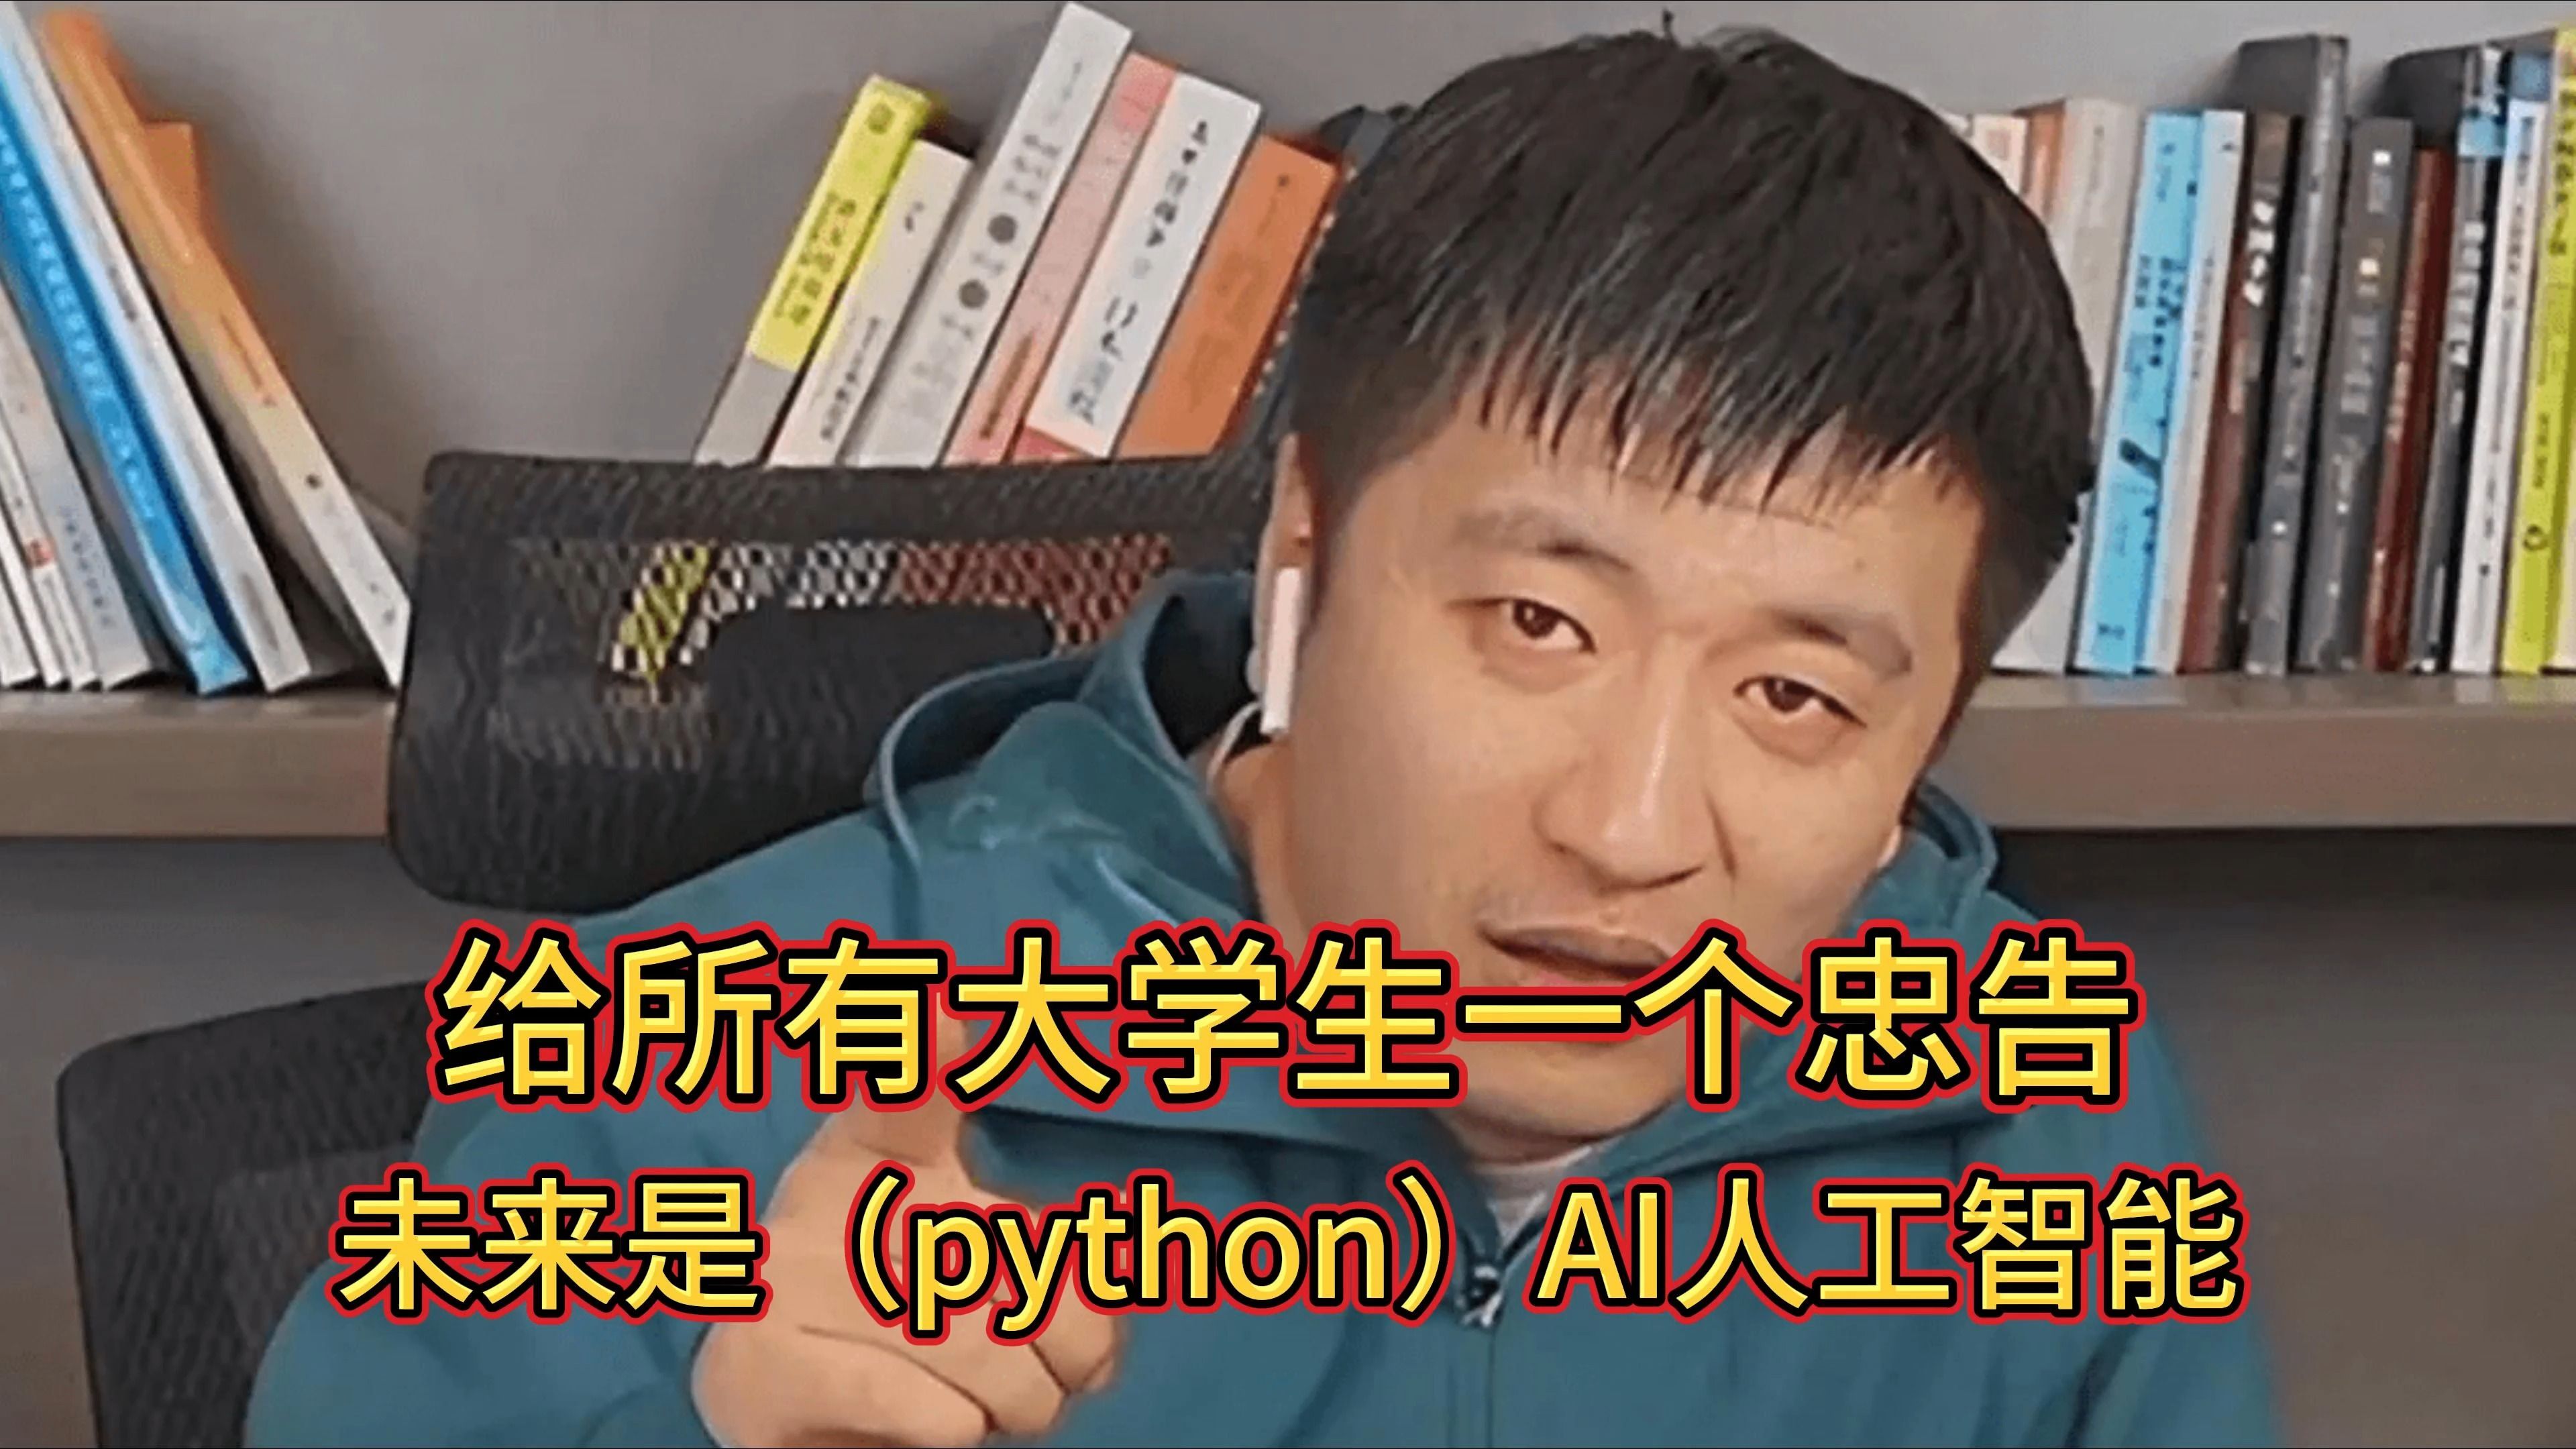 （python学习）张雪峰:给所有大学生一个忠告 未来是ai人工智能领域 最好现在开始学python